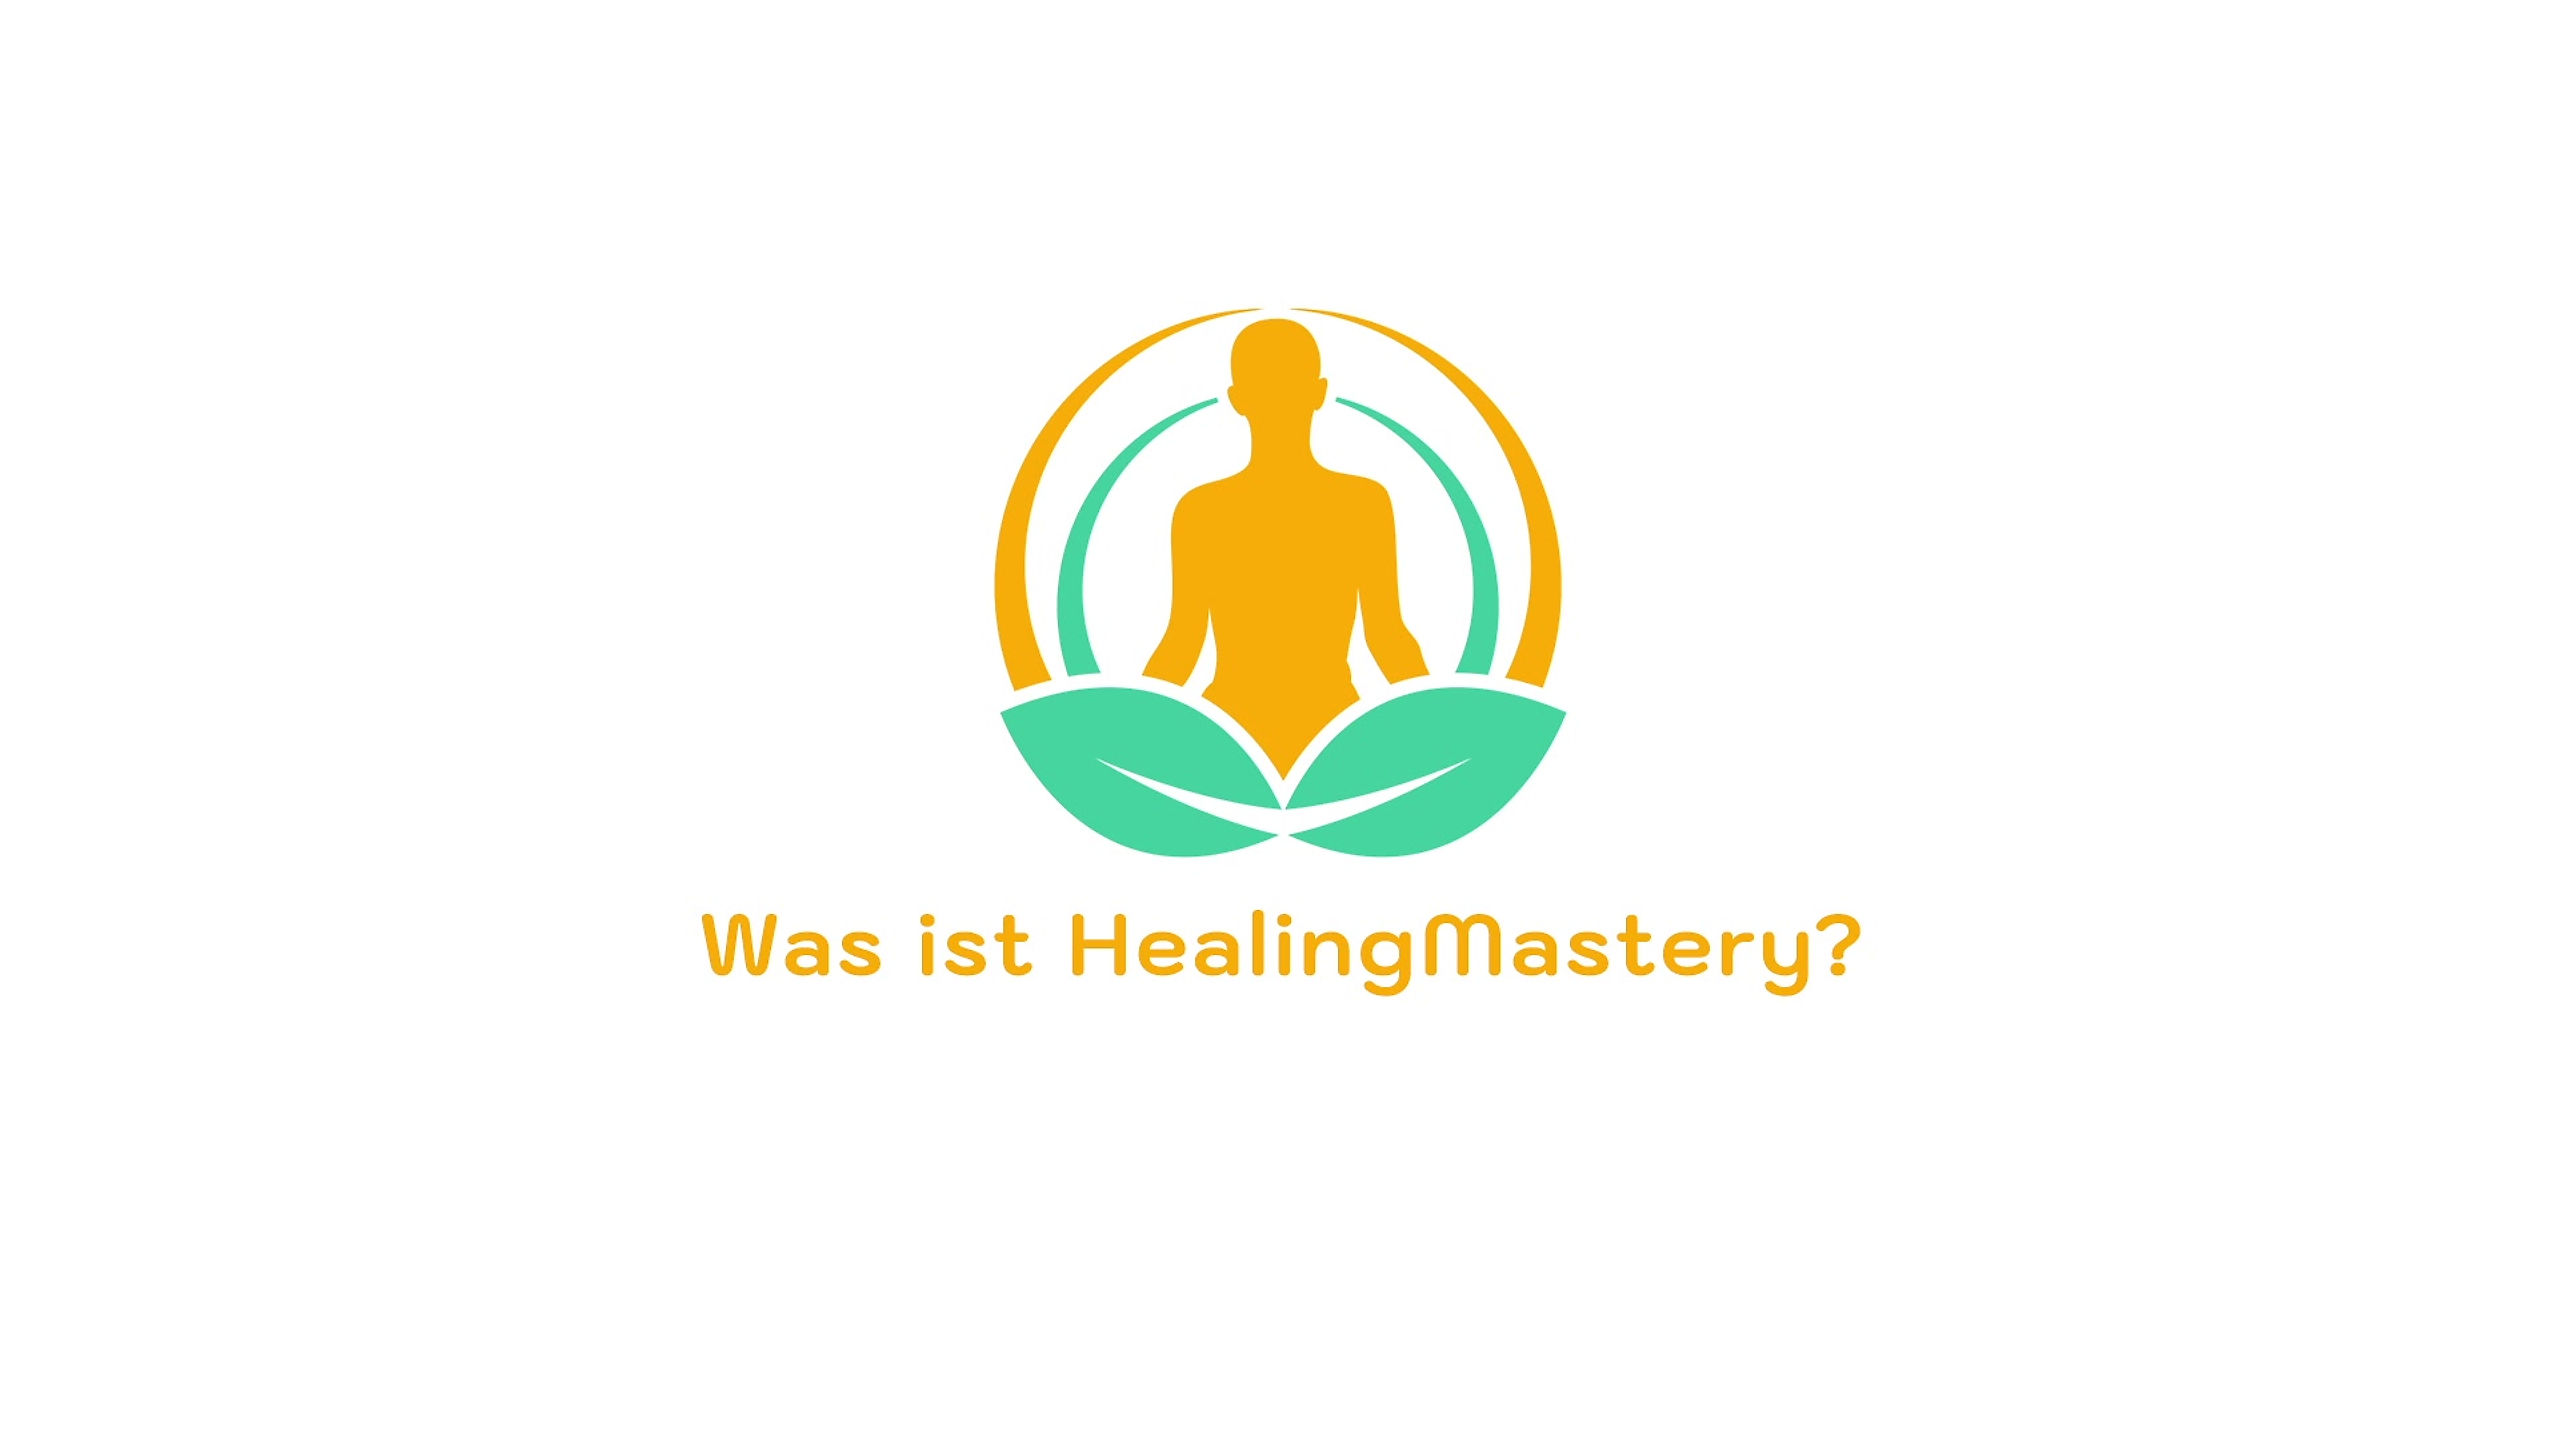 Was ist HealingMastery?